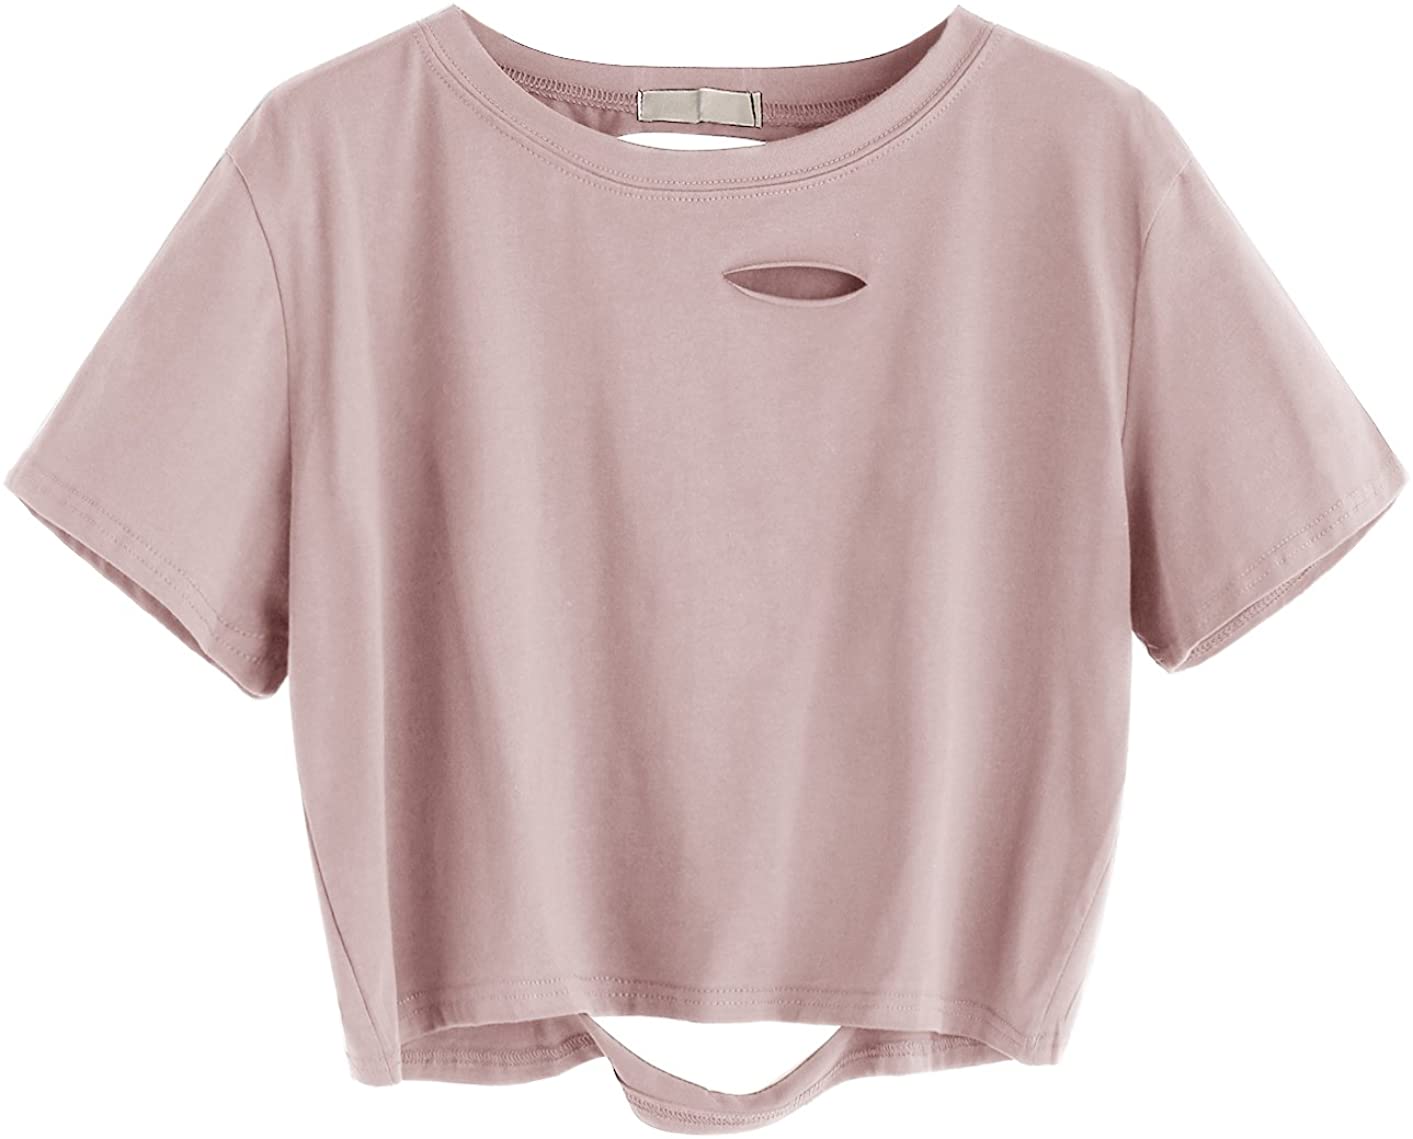 SweatyRocks Women's Basic Short Sleeve V Neck Crop Tee Shirt Plain